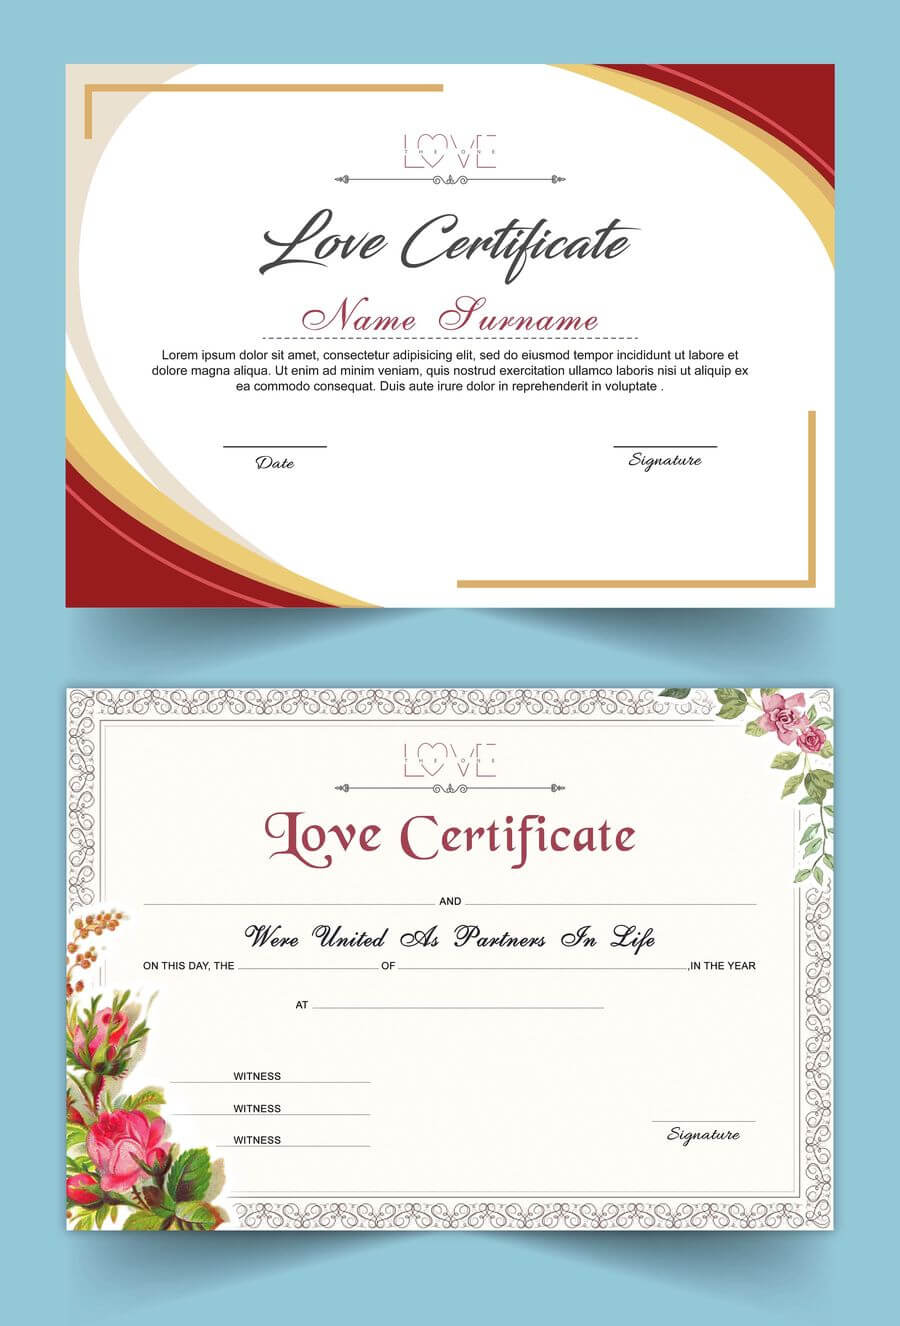 Entry #15Satishandsurabhi For Design A Love Certificate Intended For Love Certificate Templates